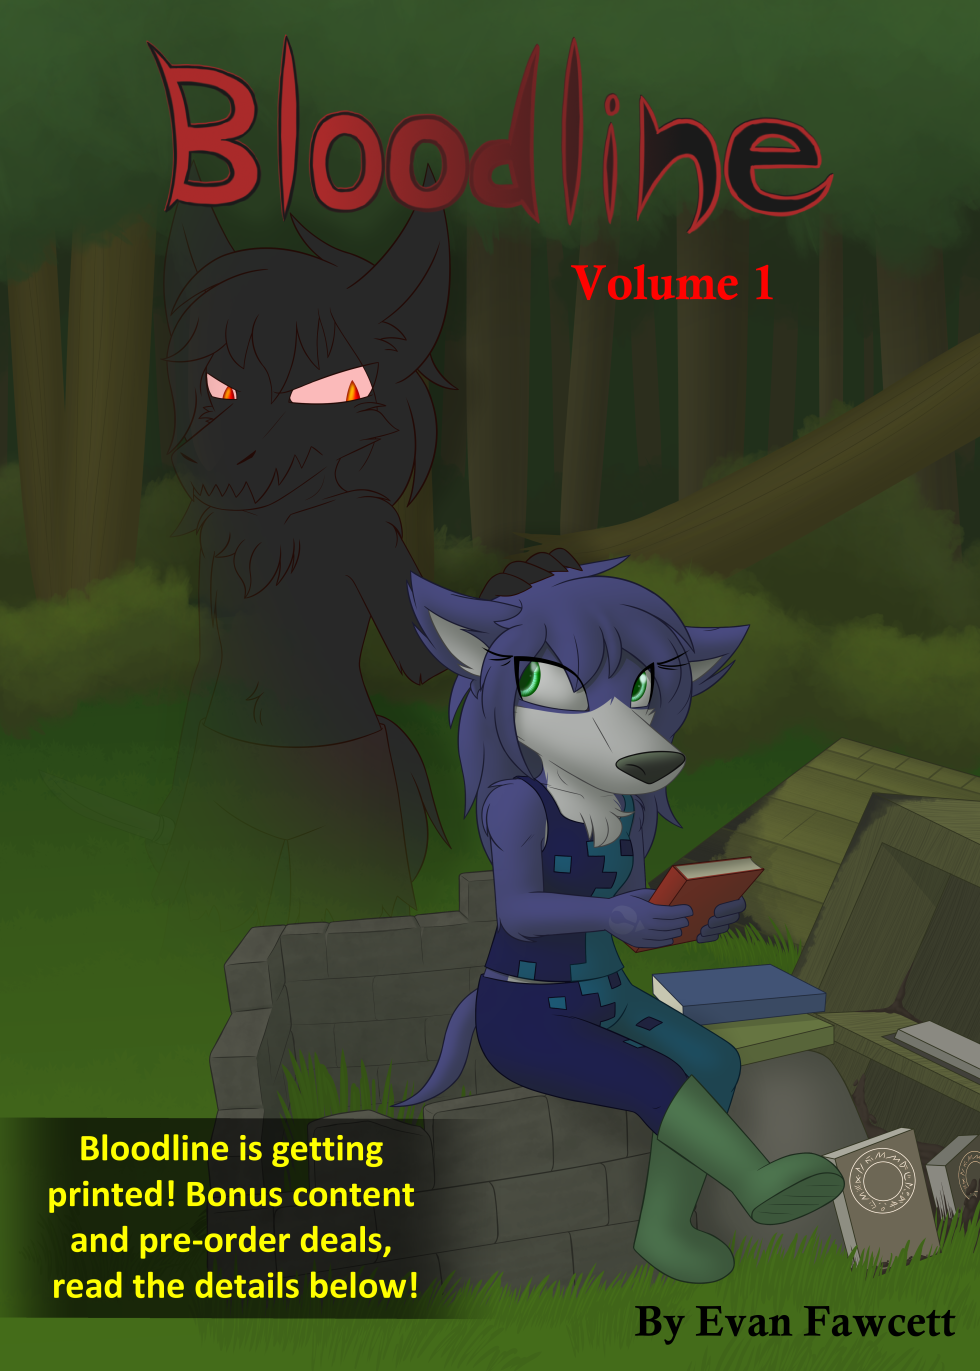 Bloodline Volume 1 preorders